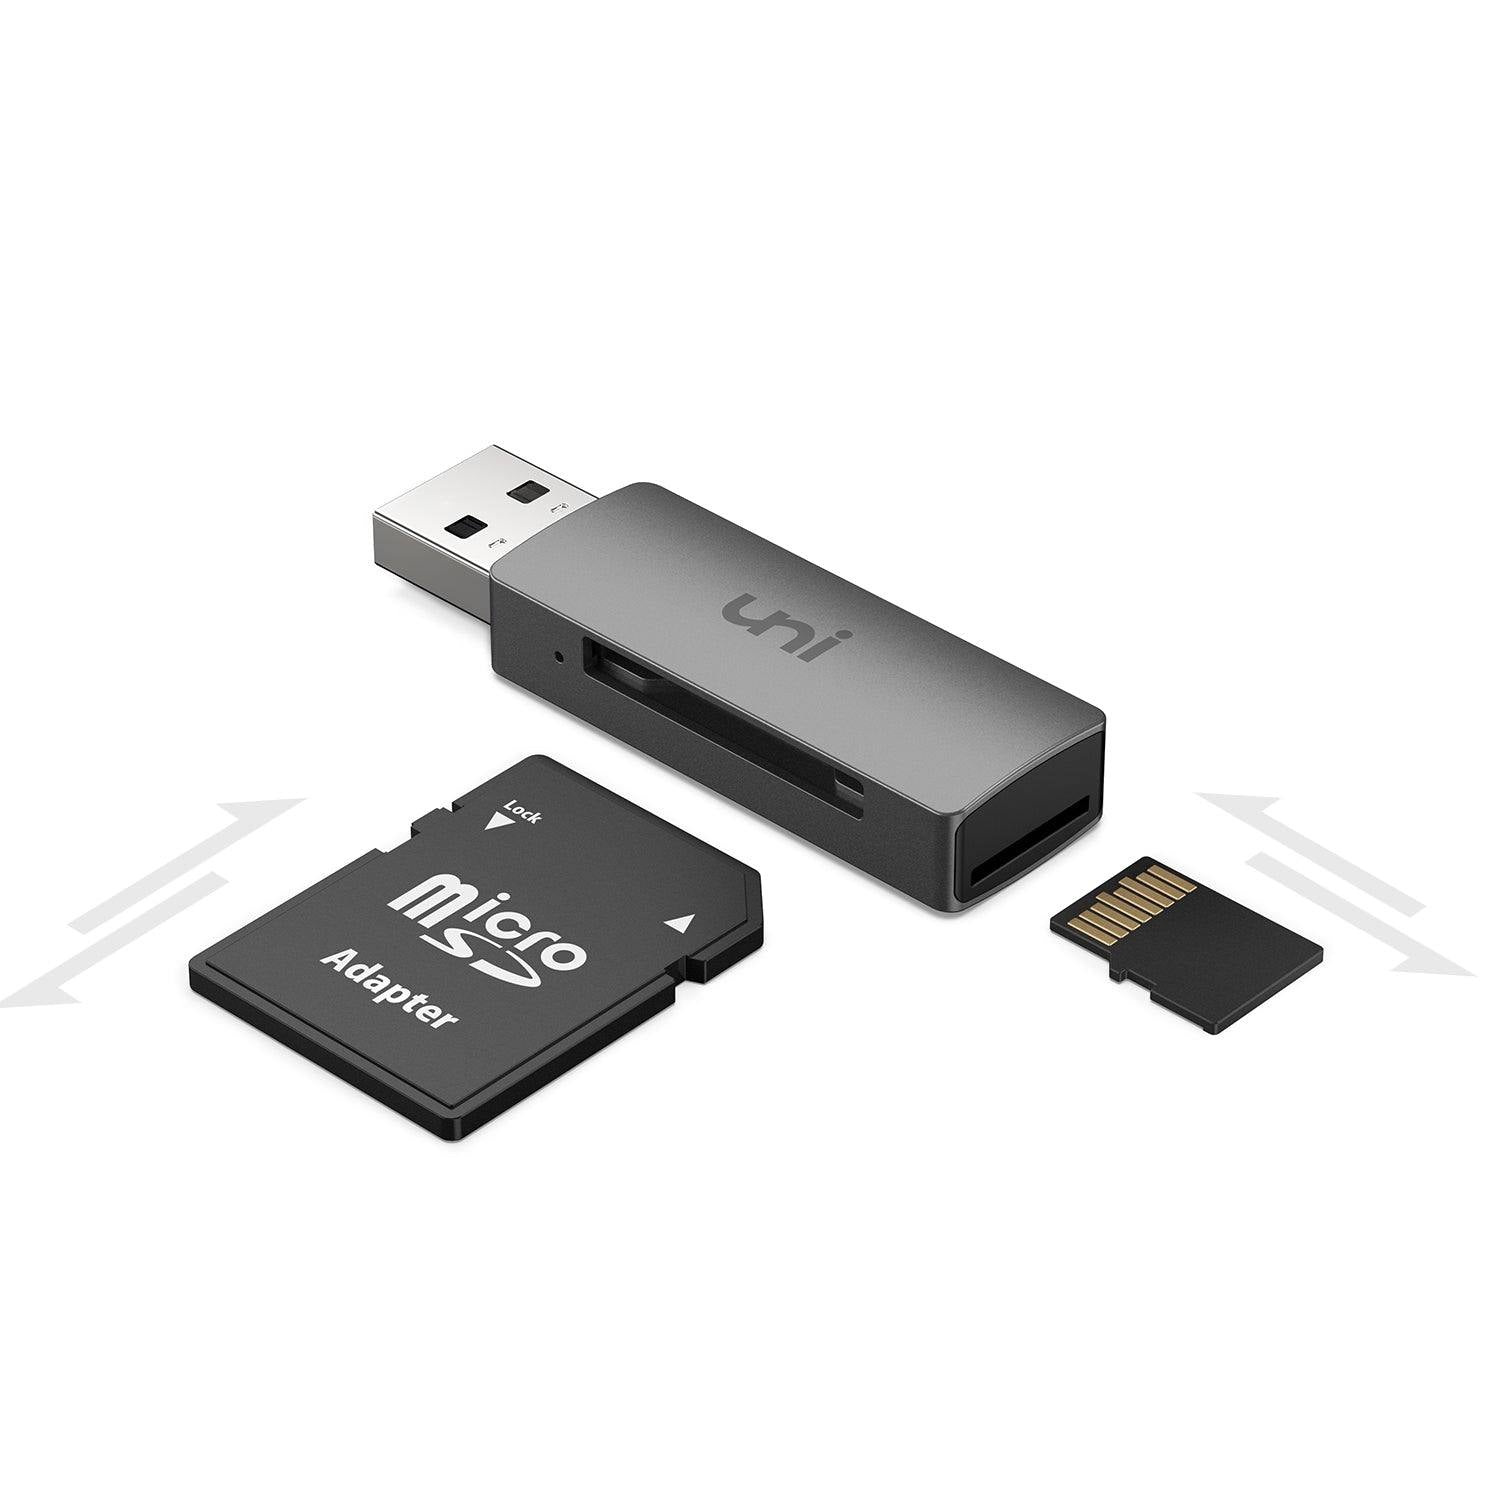 SD Card Reader USB Hub 3.0,8 in 2 Multi Memory Card Reader for SD TF